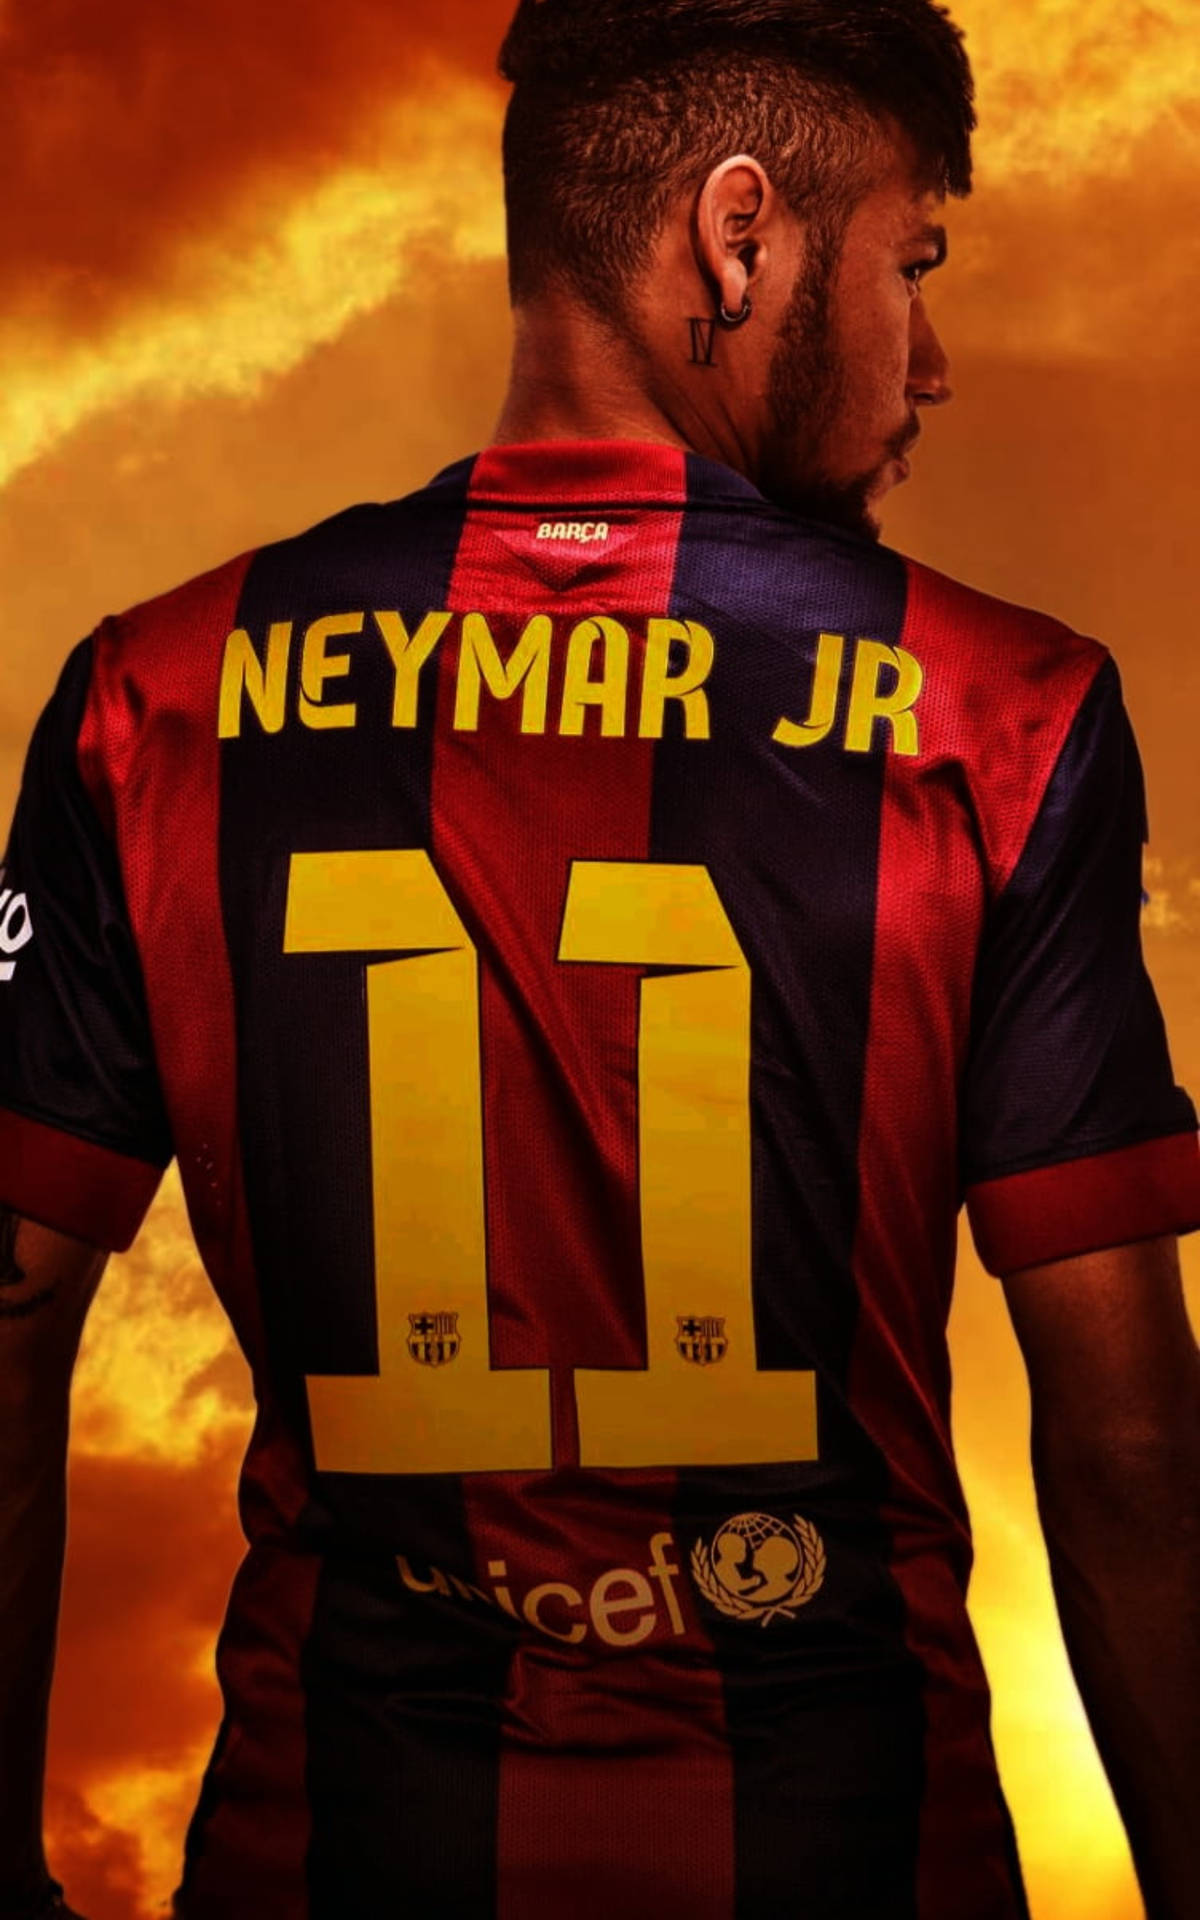 Neymar Jr In Number 11 Background